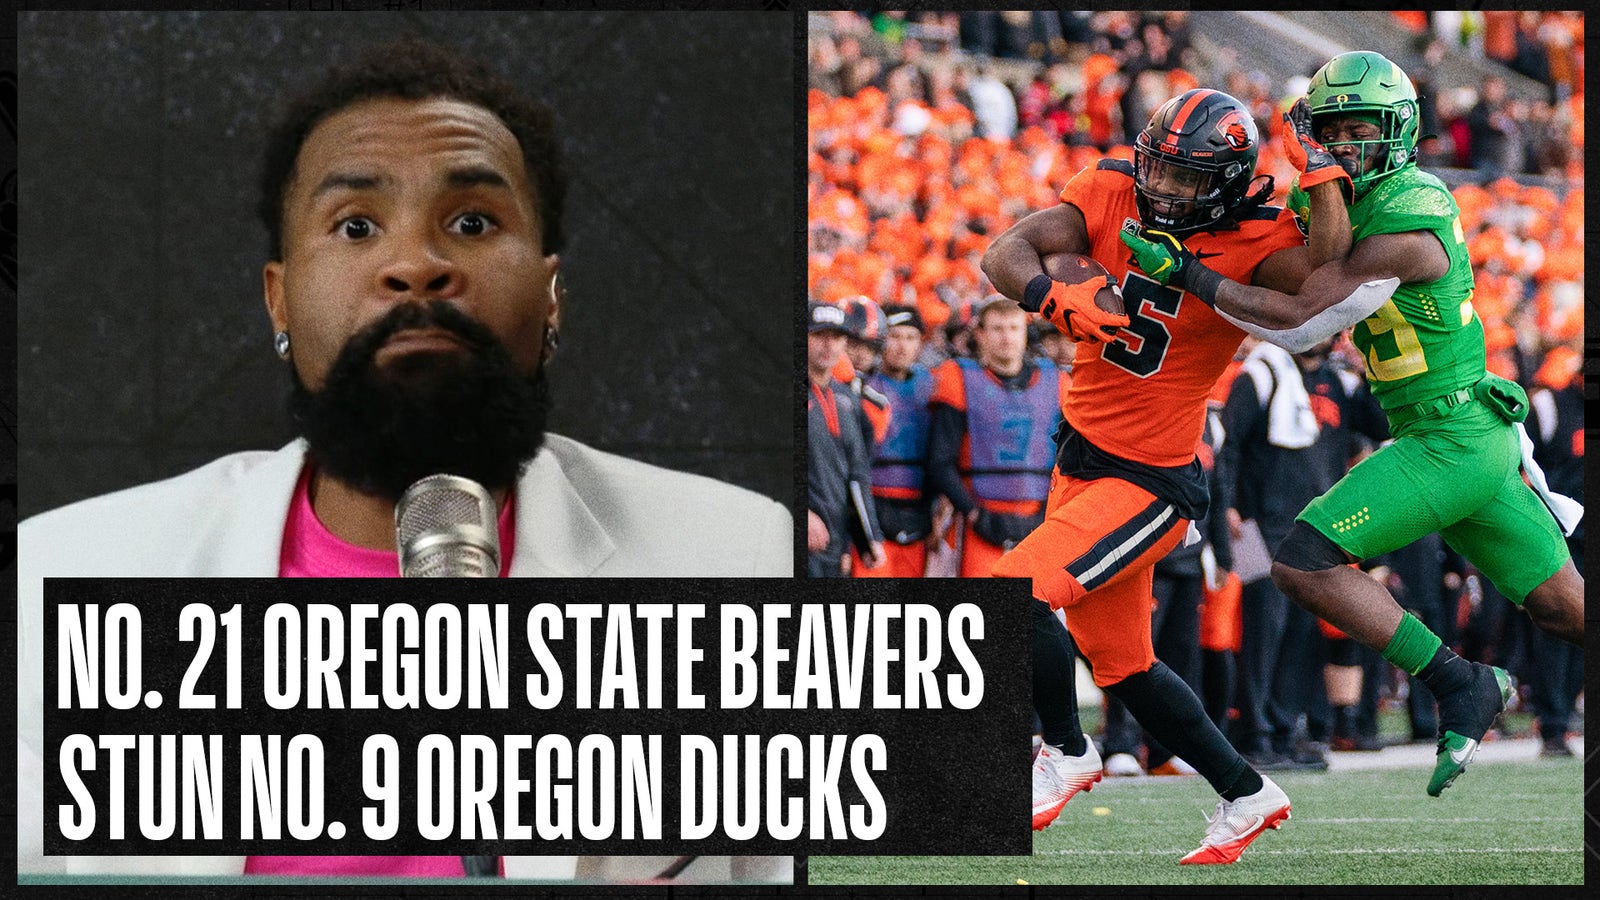 Oregon State upsets #9 Oregon